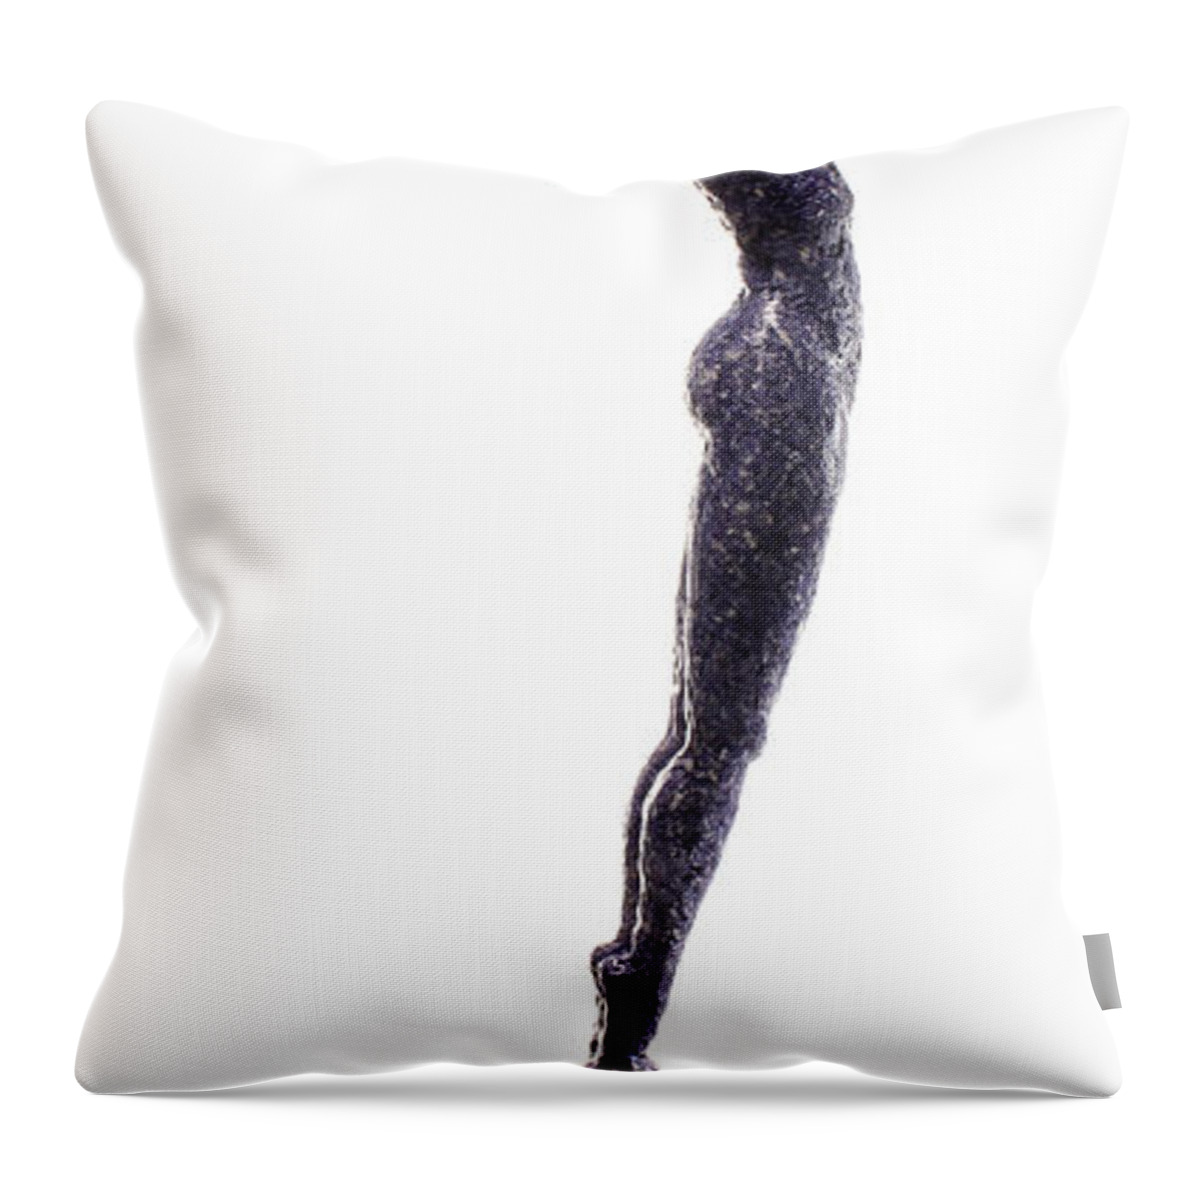 Dark Matter Throw Pillow featuring the mixed media Dark Violet Matter profile by Adam Long